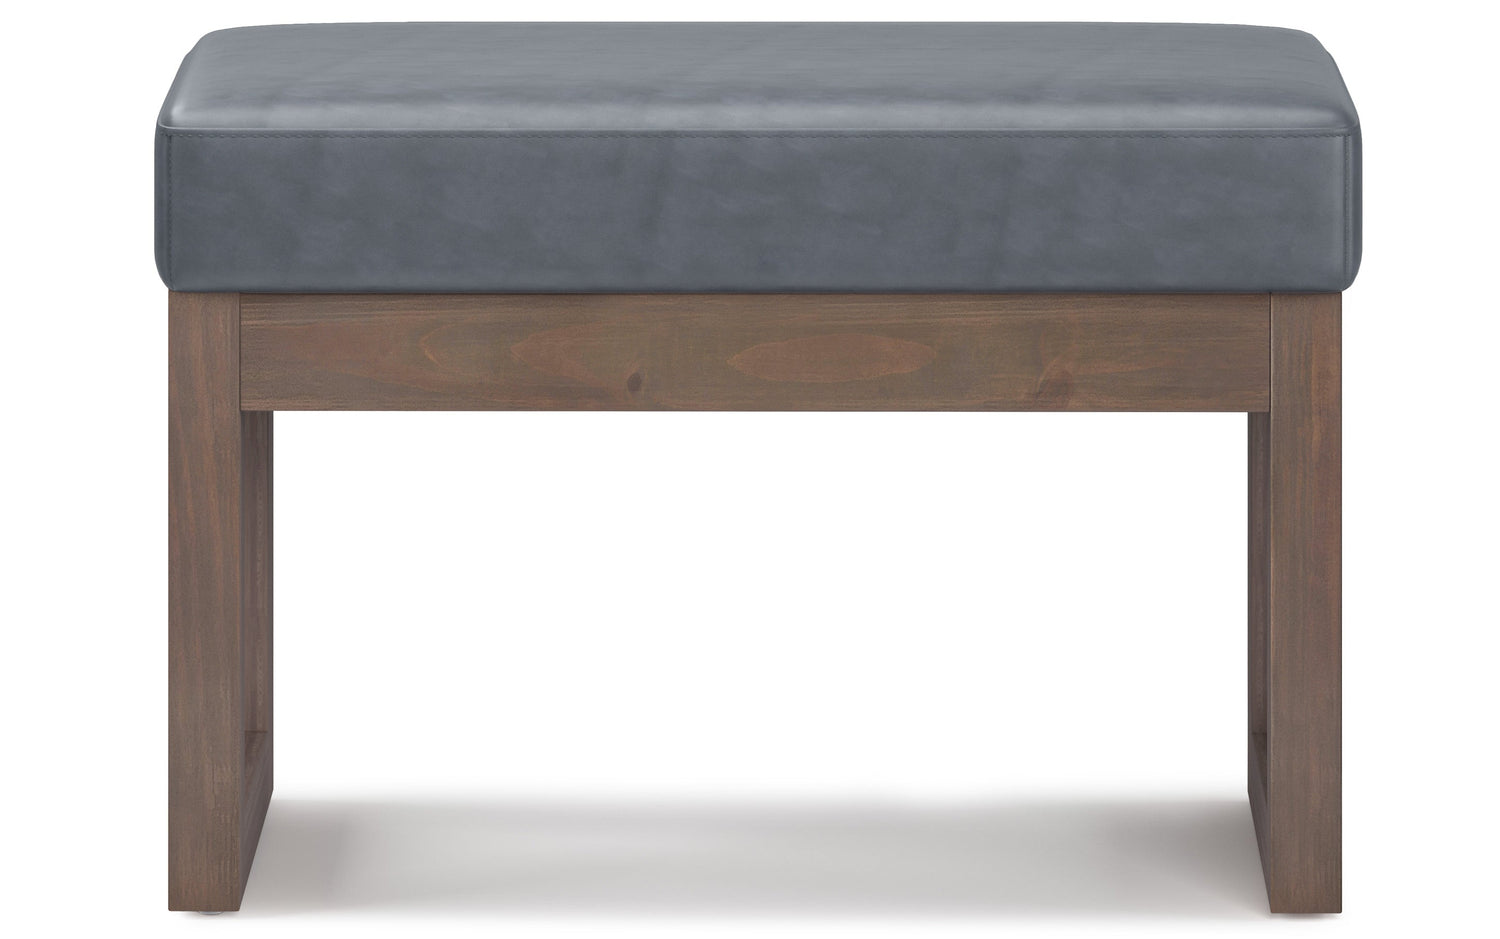 Stone Grey Vegan Leather | Milltown Footstool Small Ottoman Bench